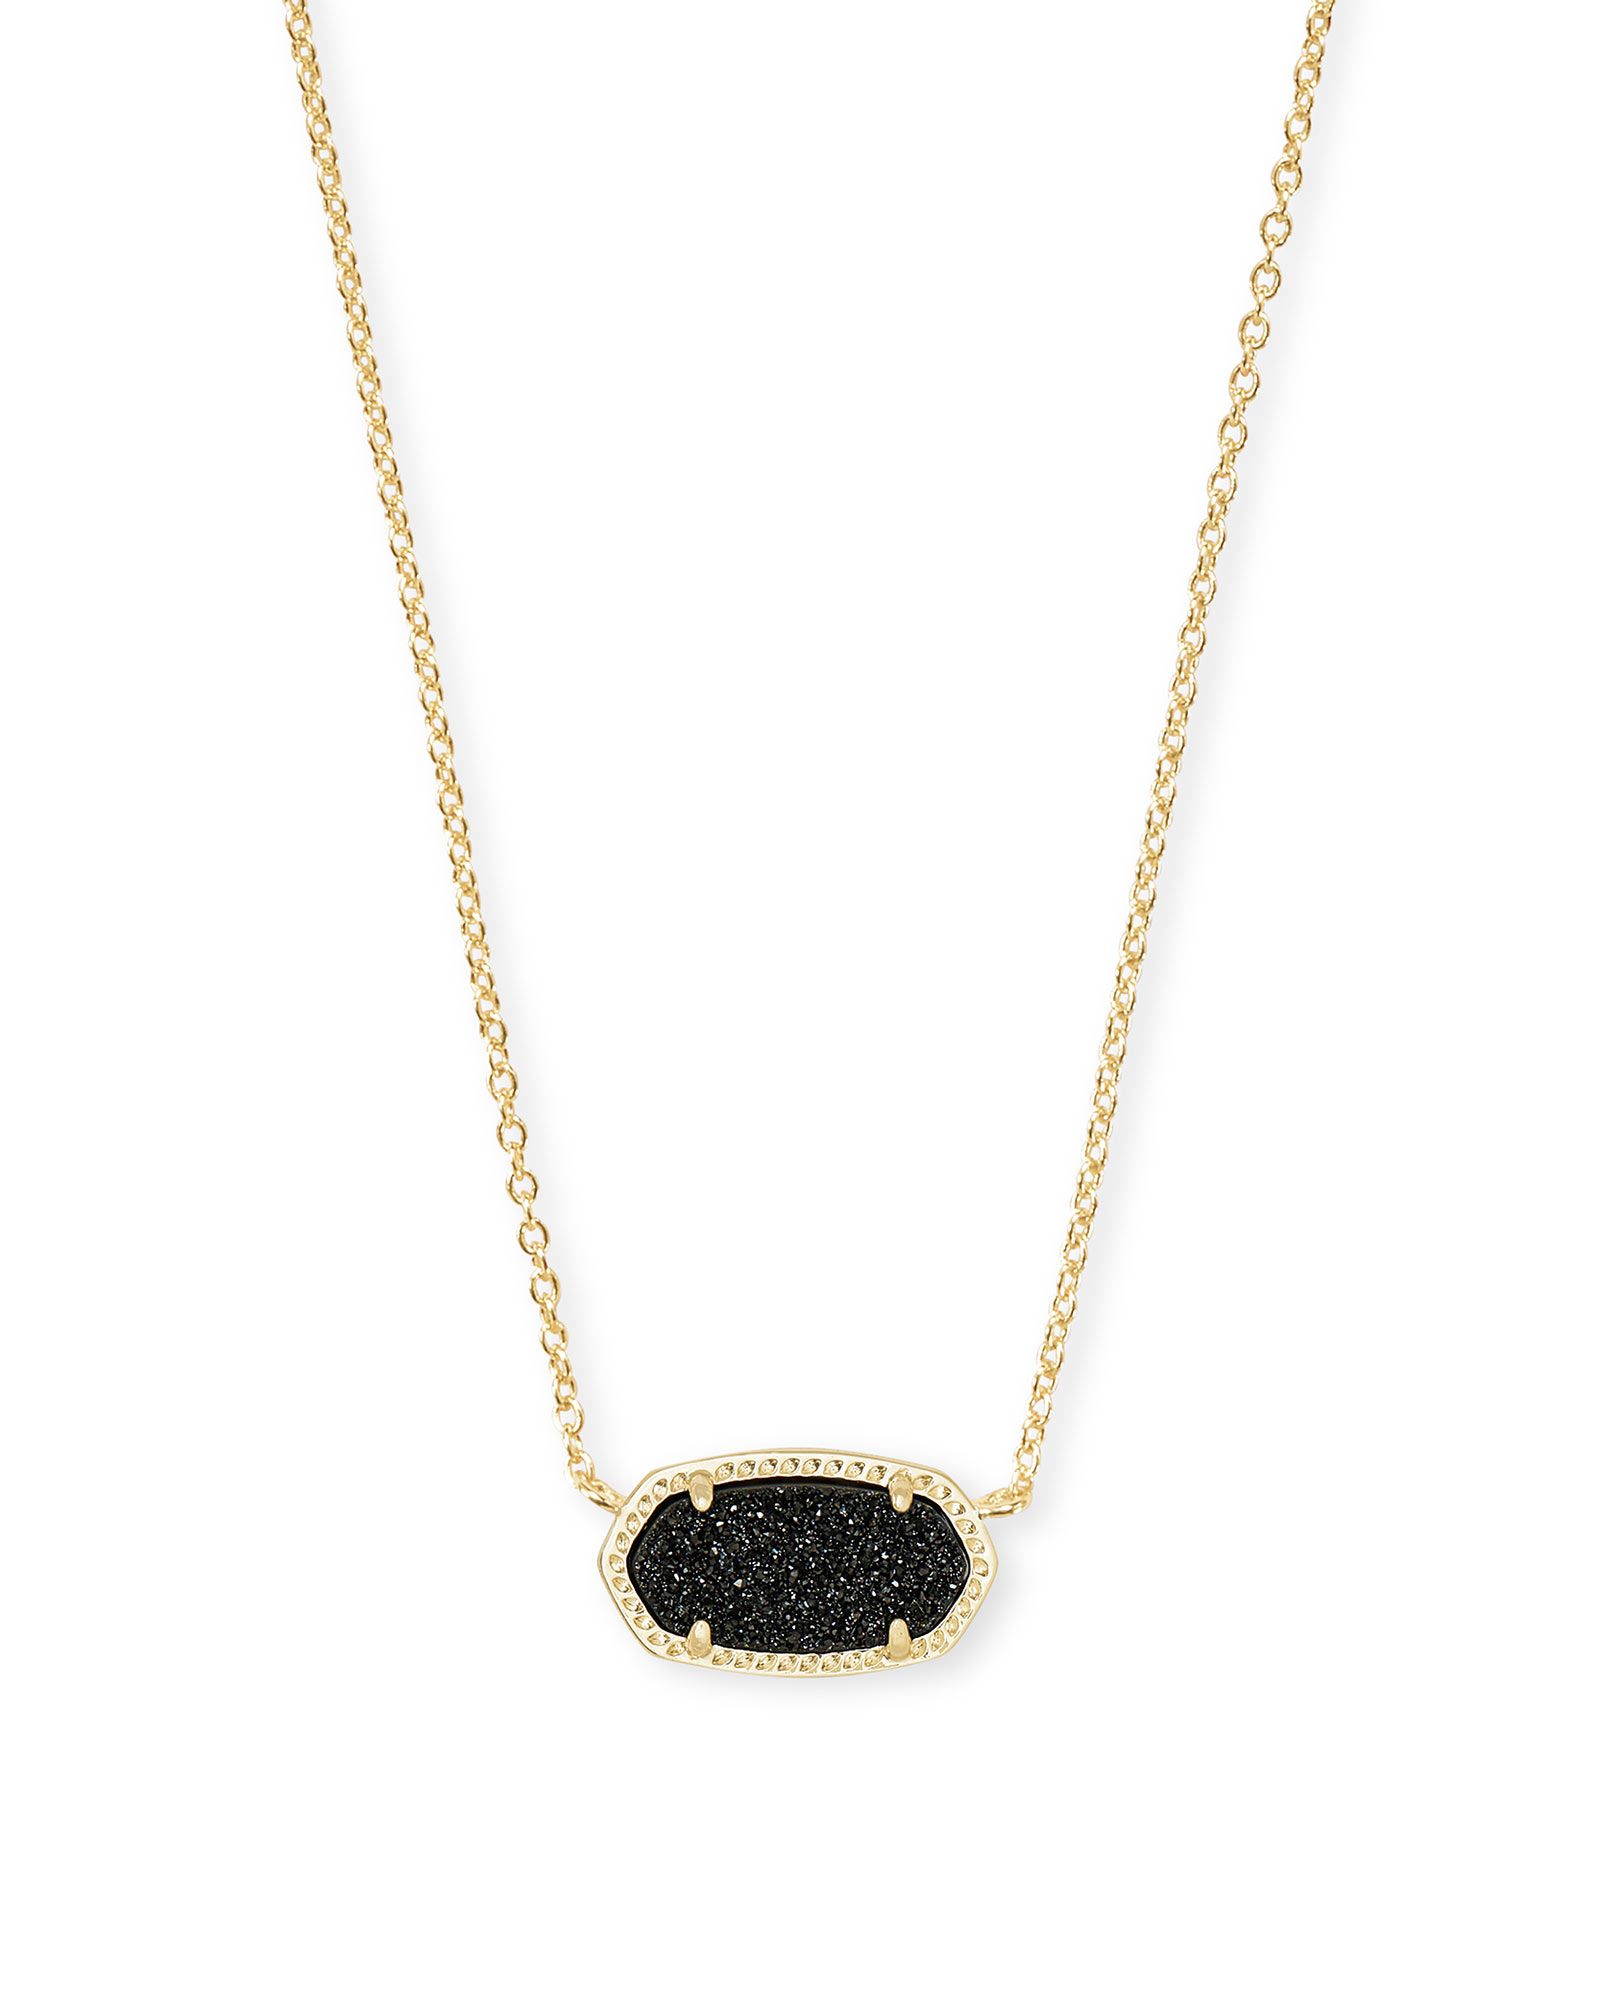 Elisa Gold Pendant Necklace in Black Drusy | Kendra Scott